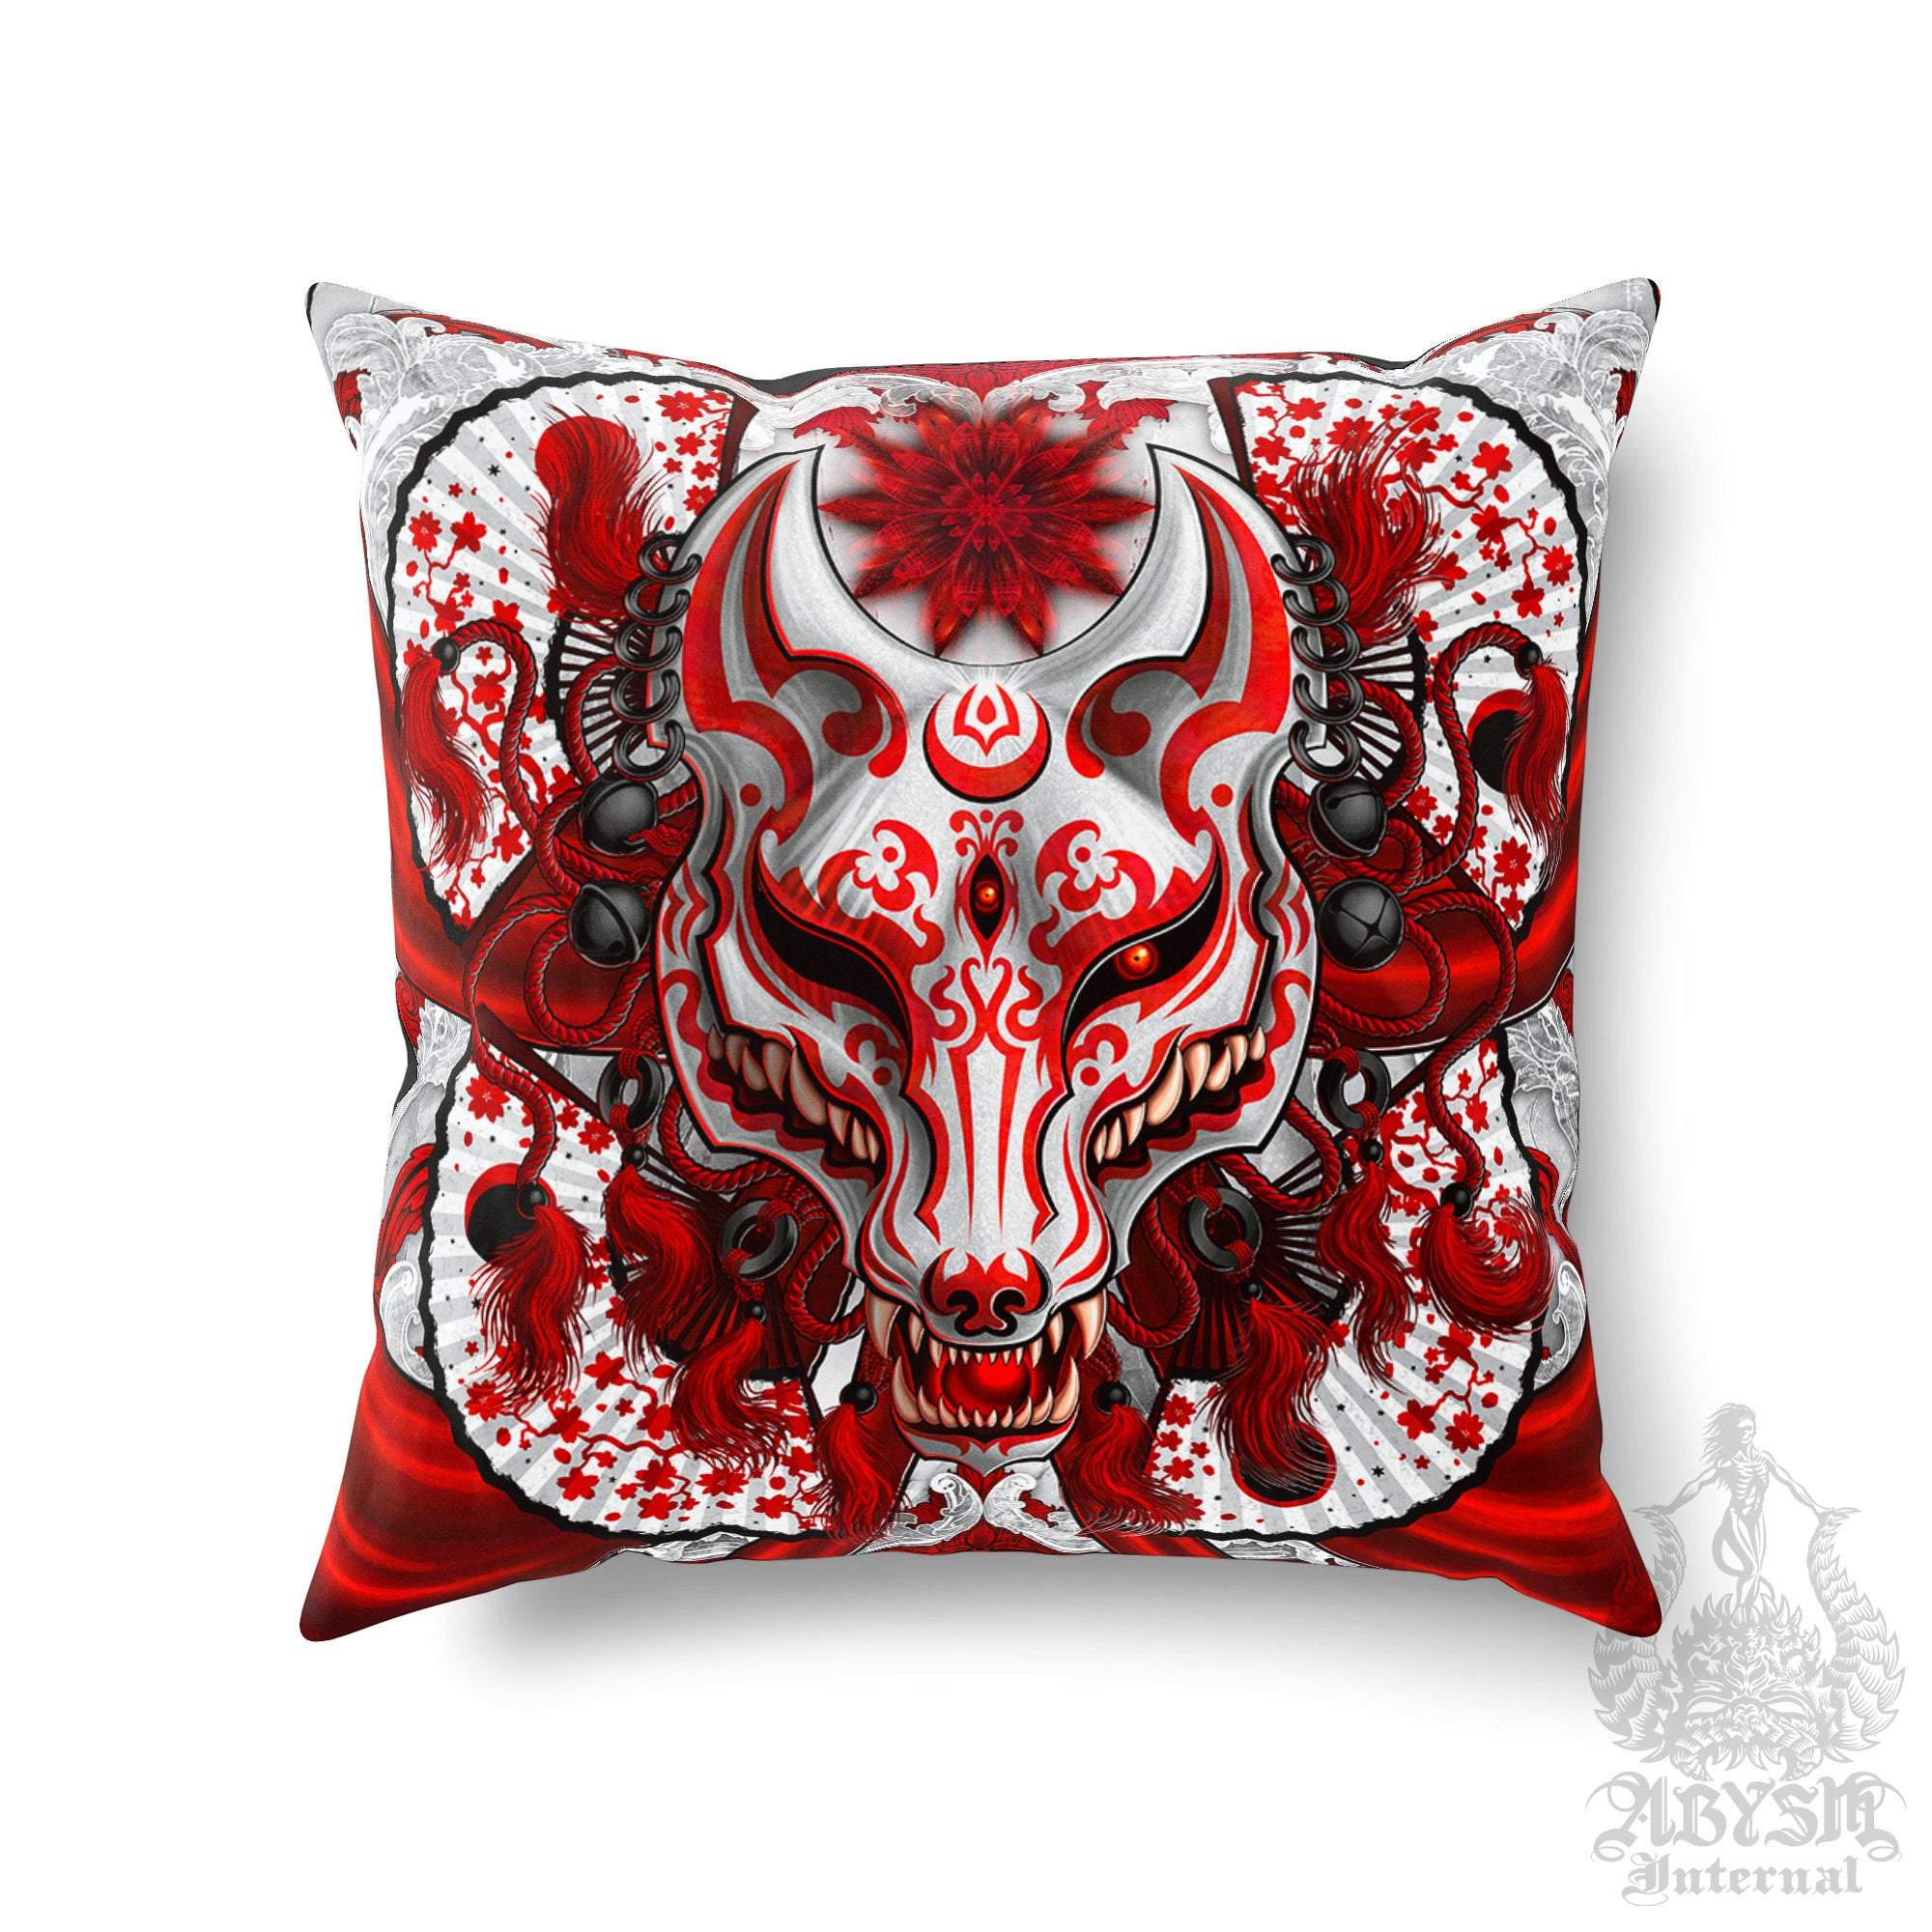 Kitsune Throw Pillow, Decorative Accent Cushion, Anime, Fox Mask, Okami, Japanese Art, Alternative Home - Bloody Red & White - Abysm Internal